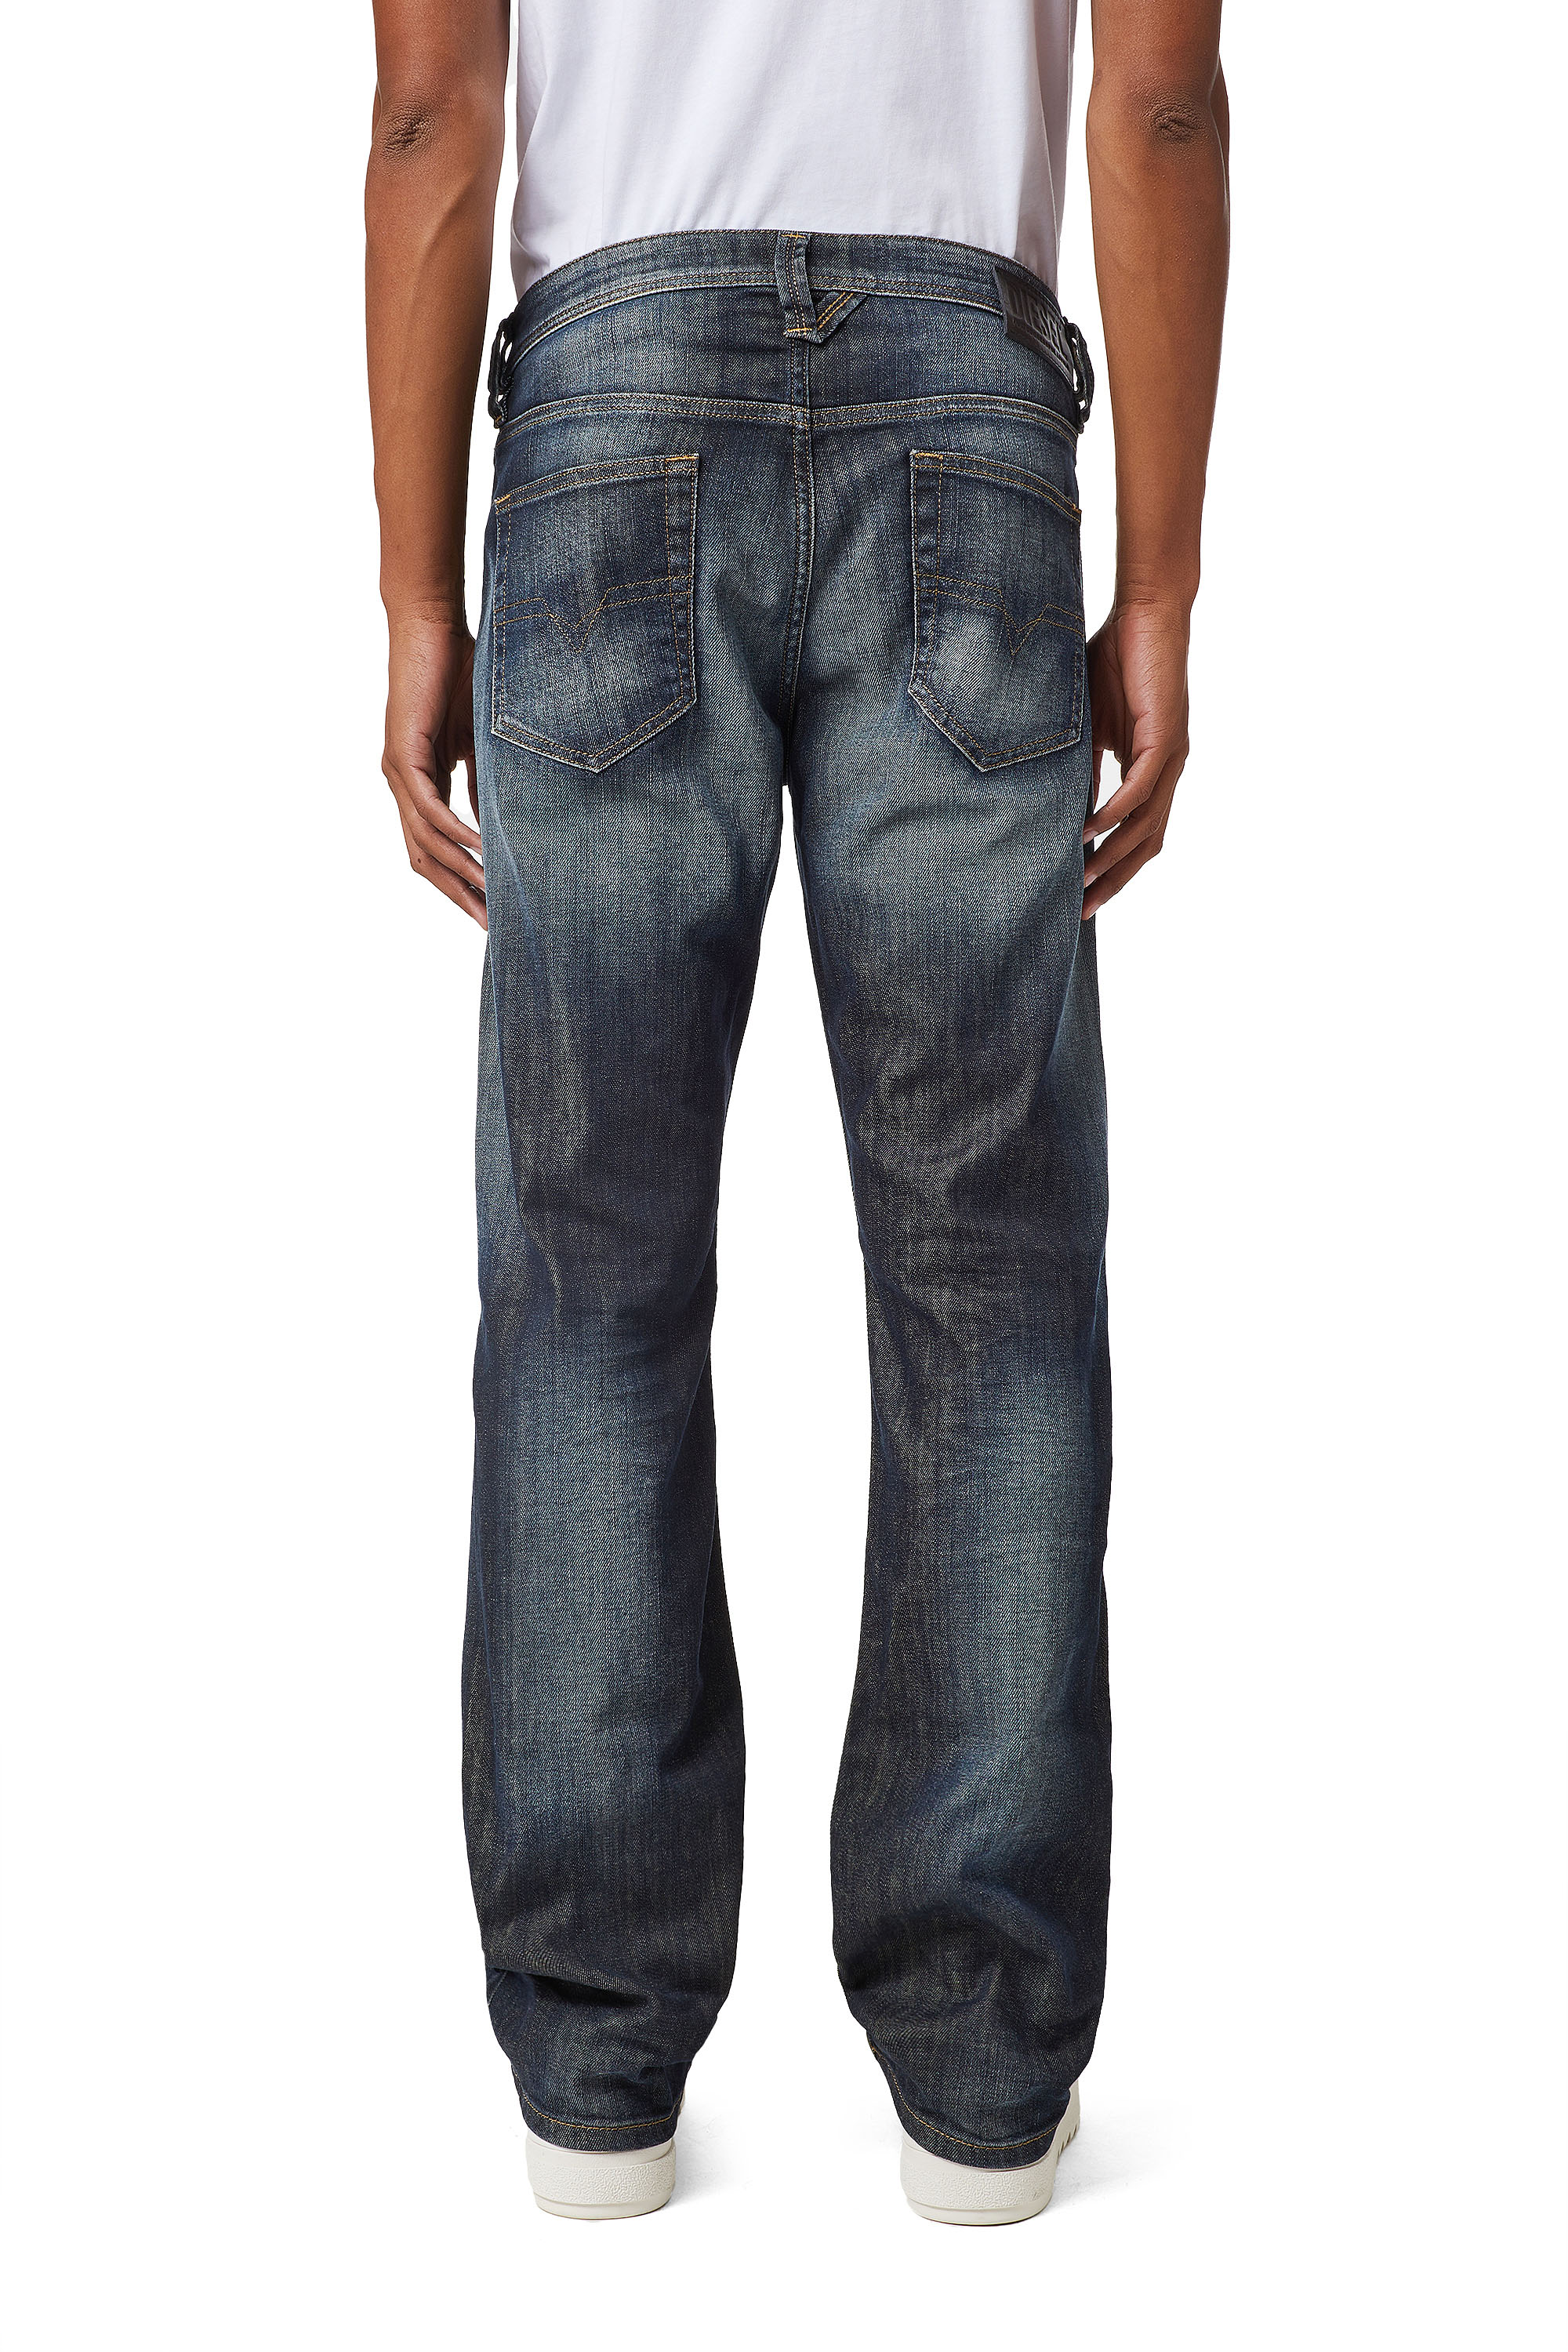 Diesel - Larkee 009EP Straight Jeans,  - Image 3